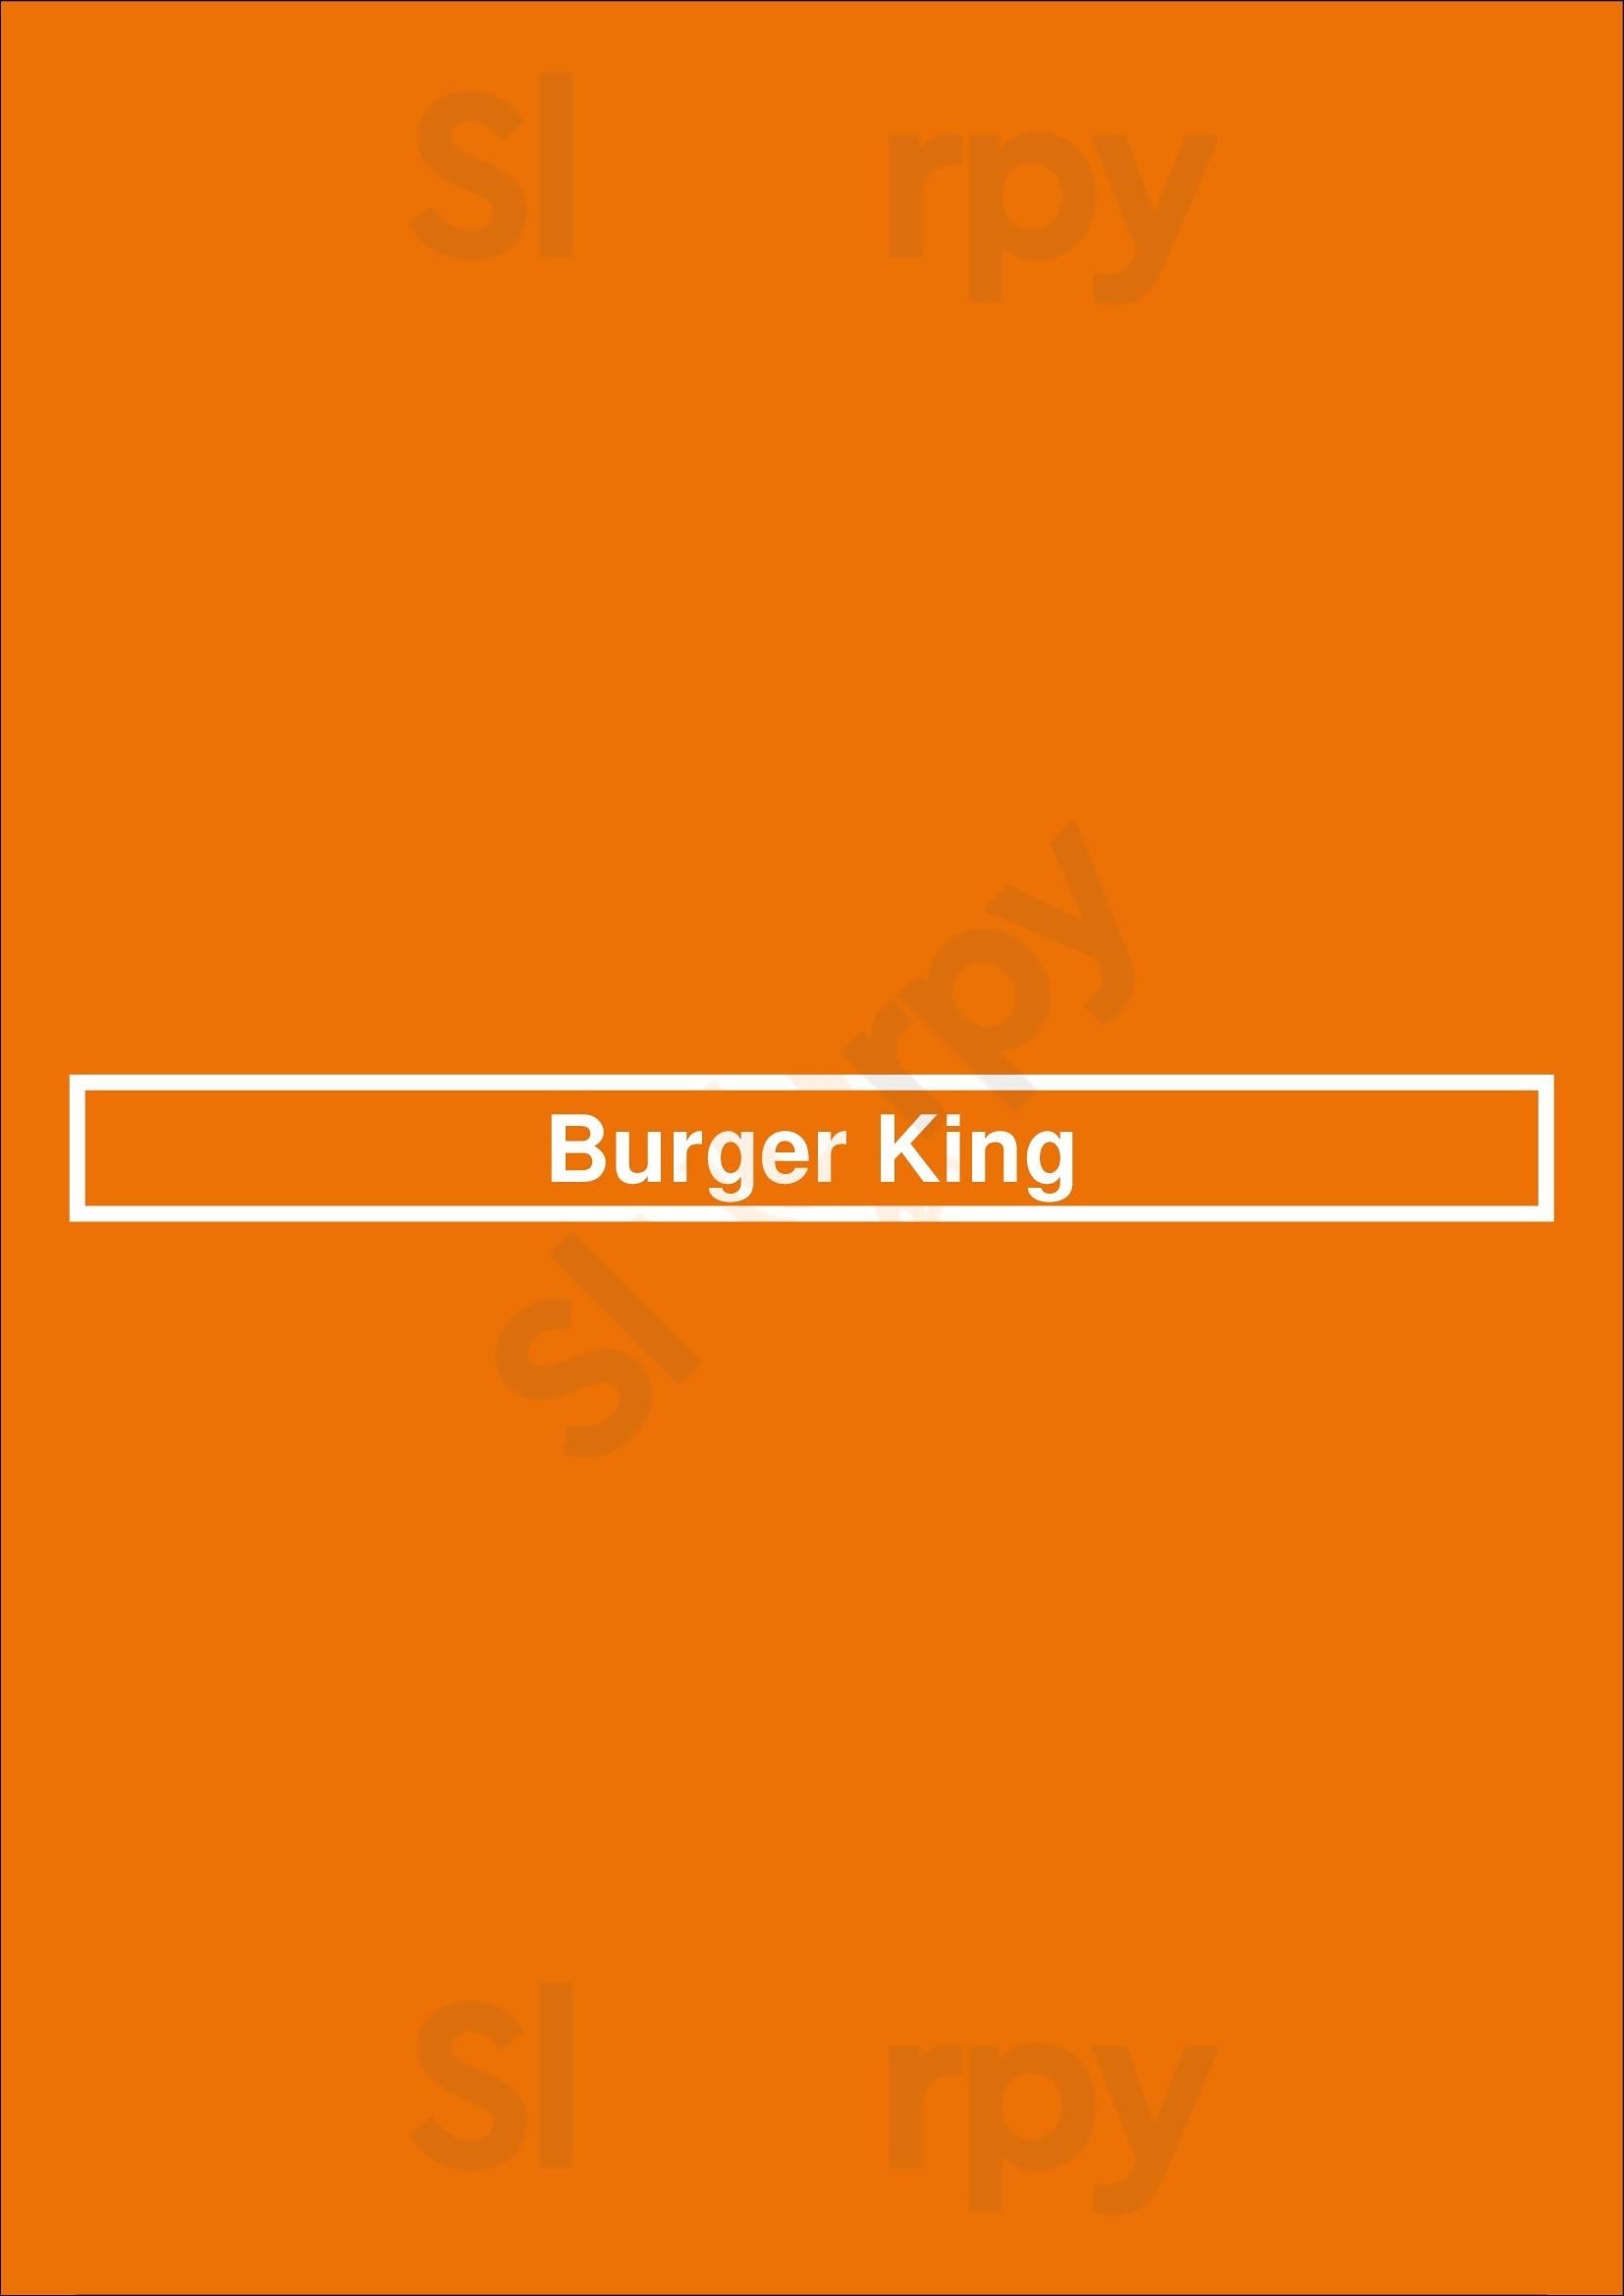 Burger King Philadelphia Menu - 1